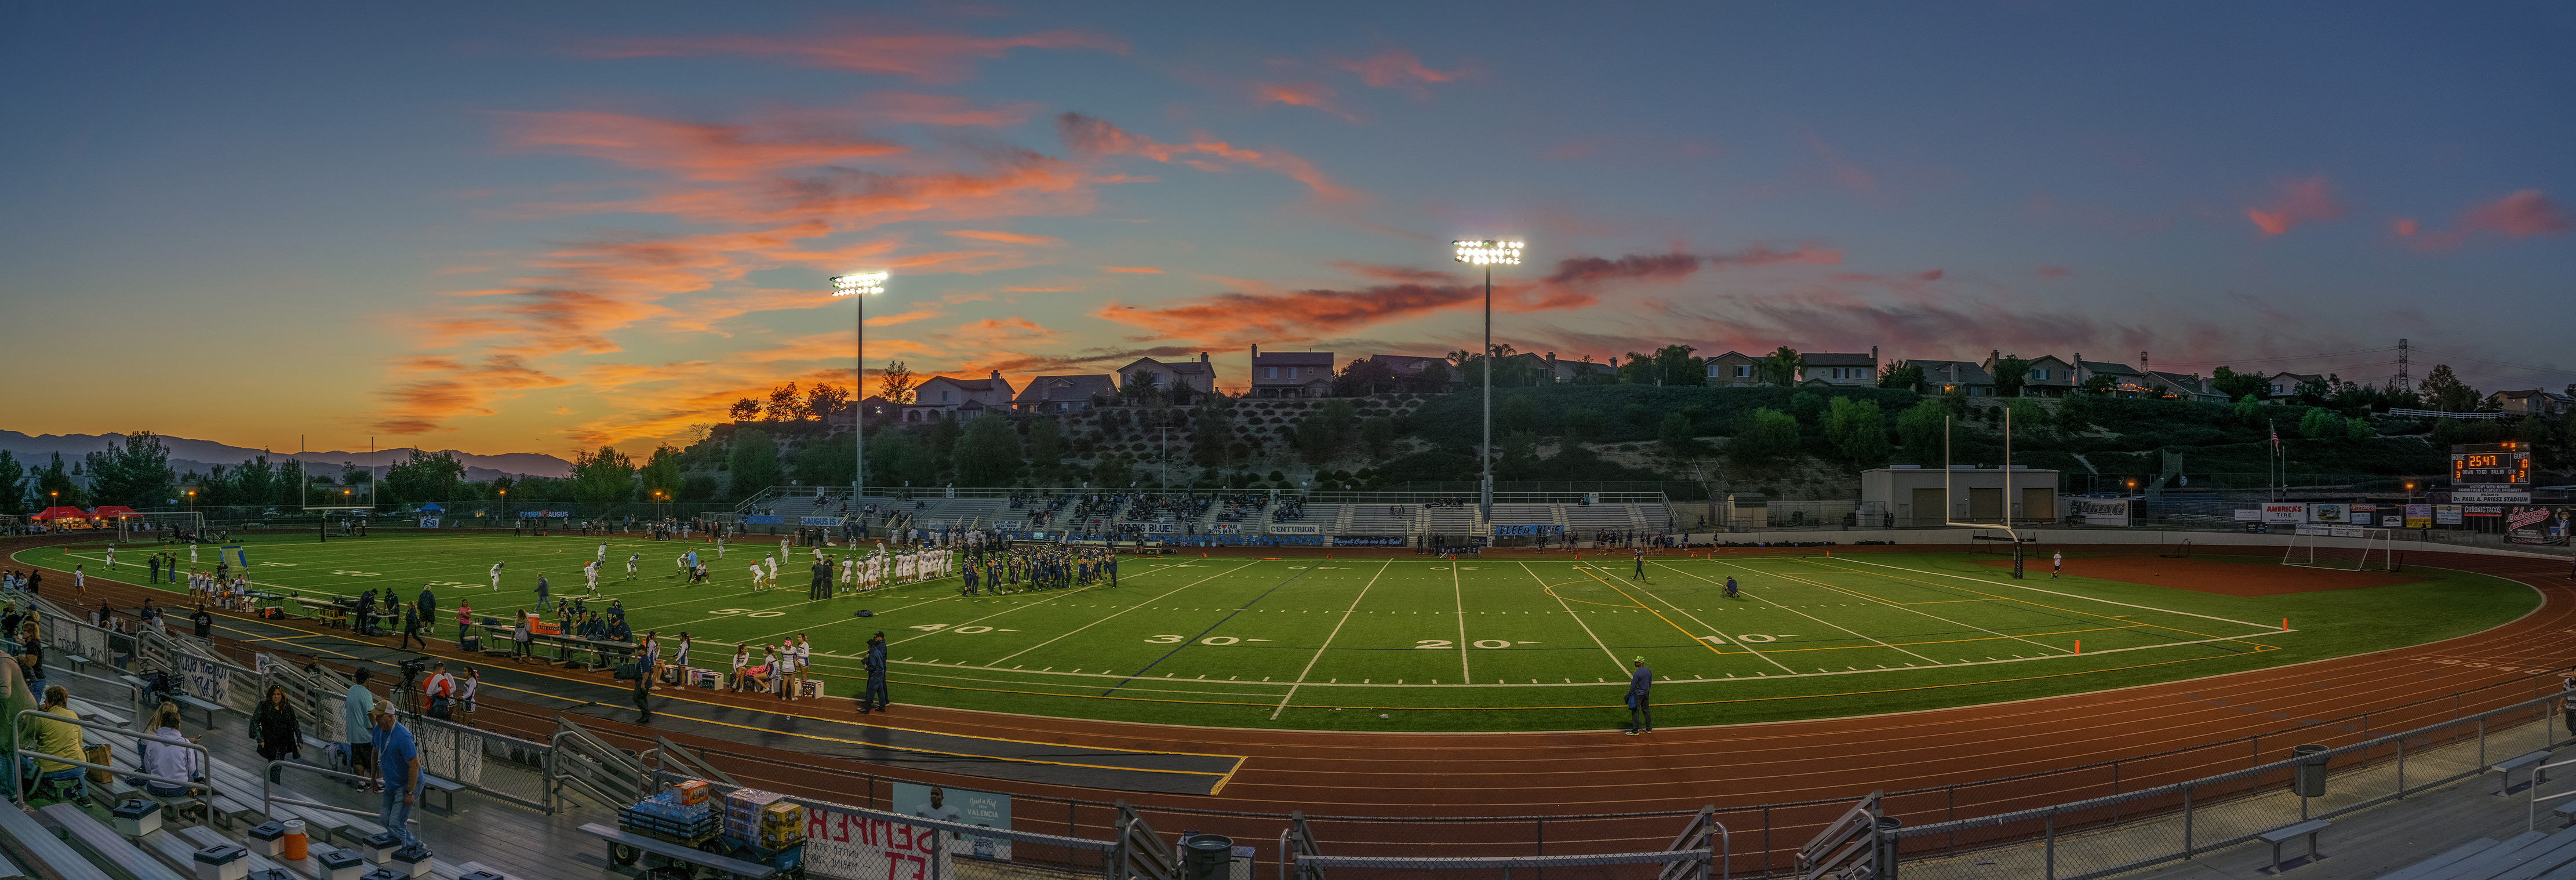 sunset and saugus football